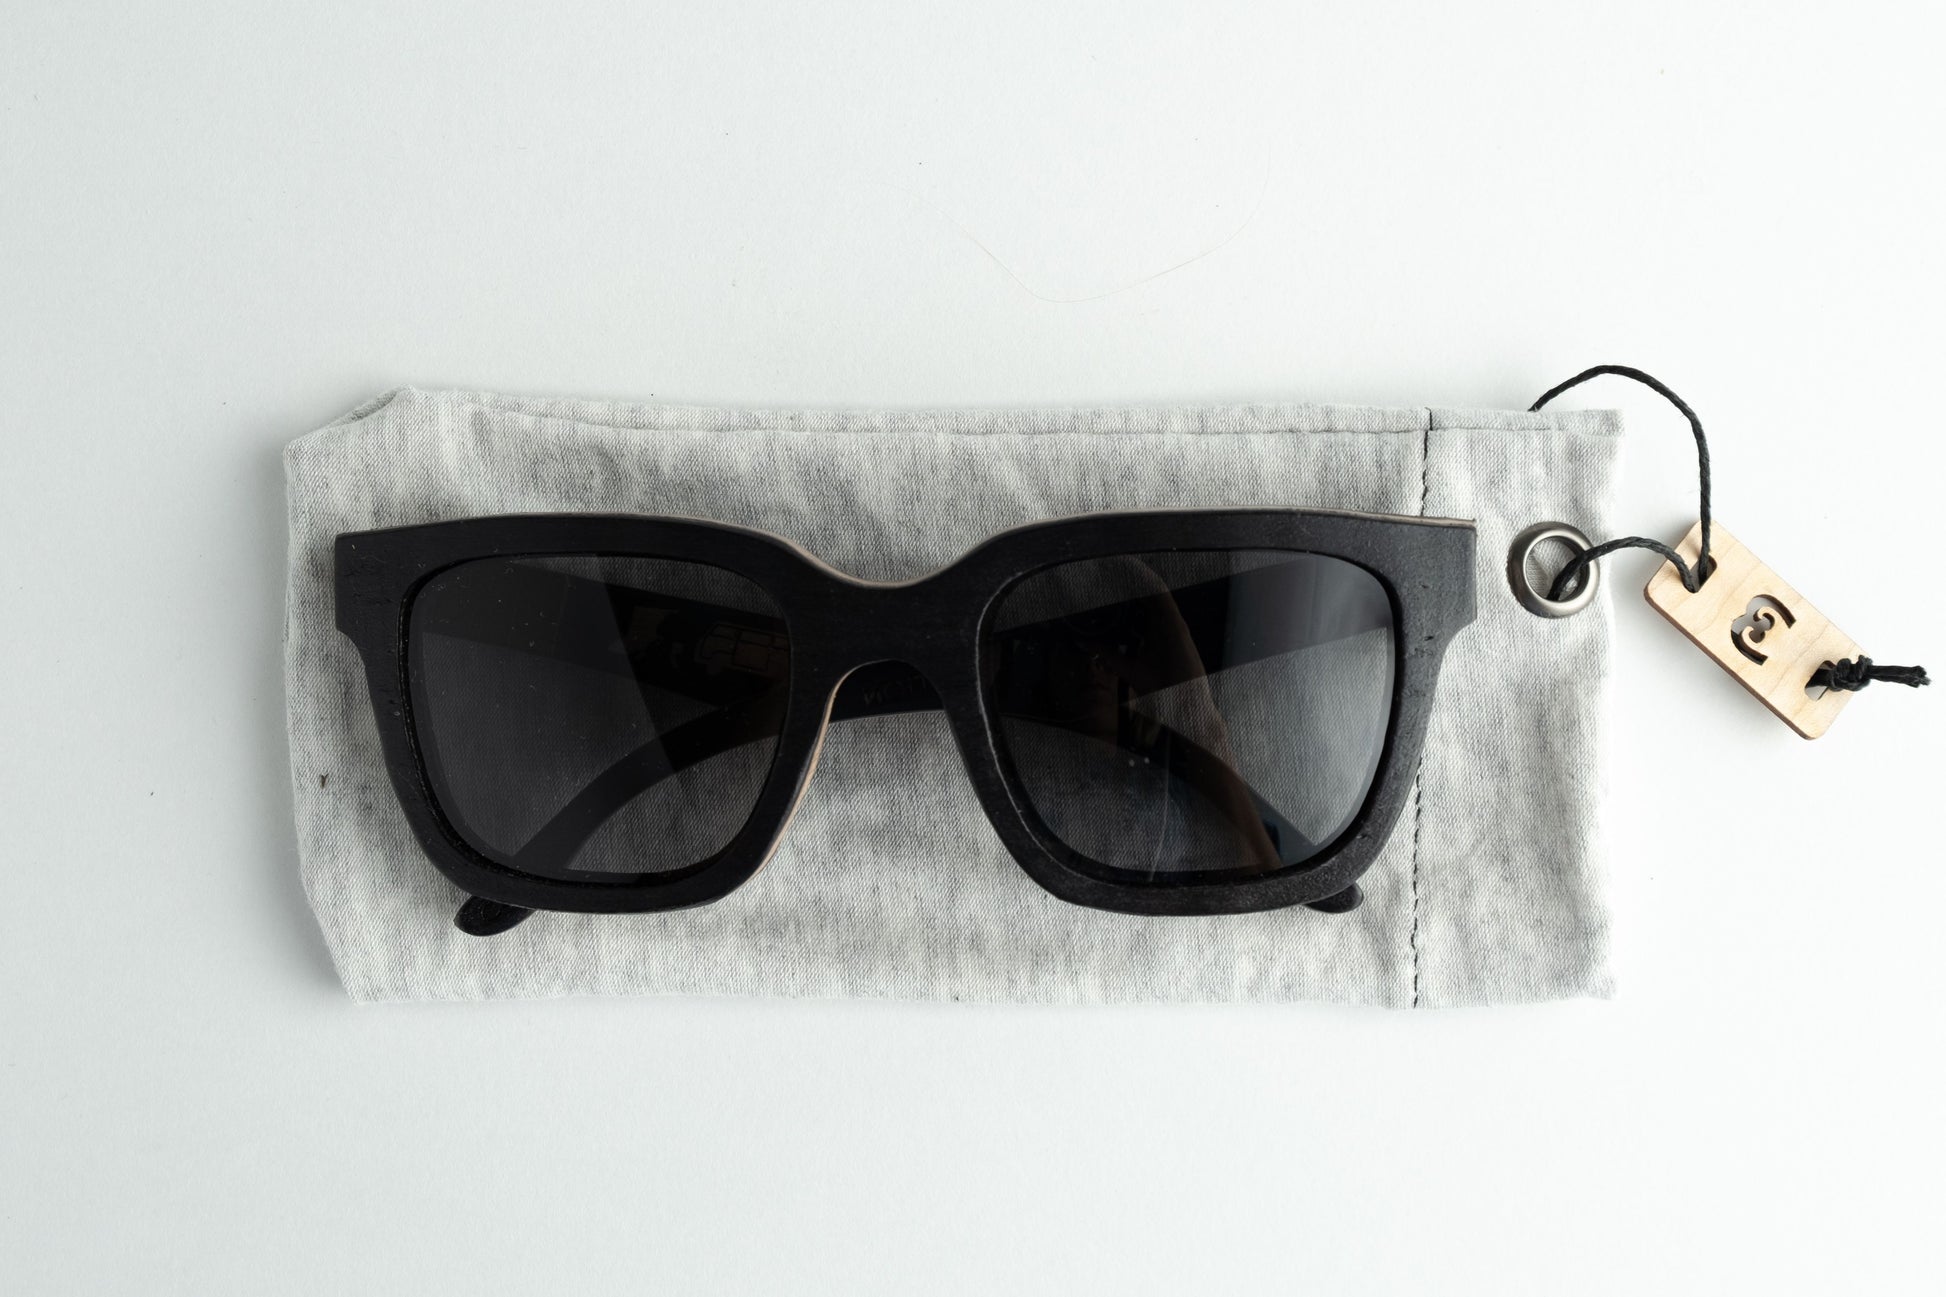 soft fabric case for polarized sunglasses 